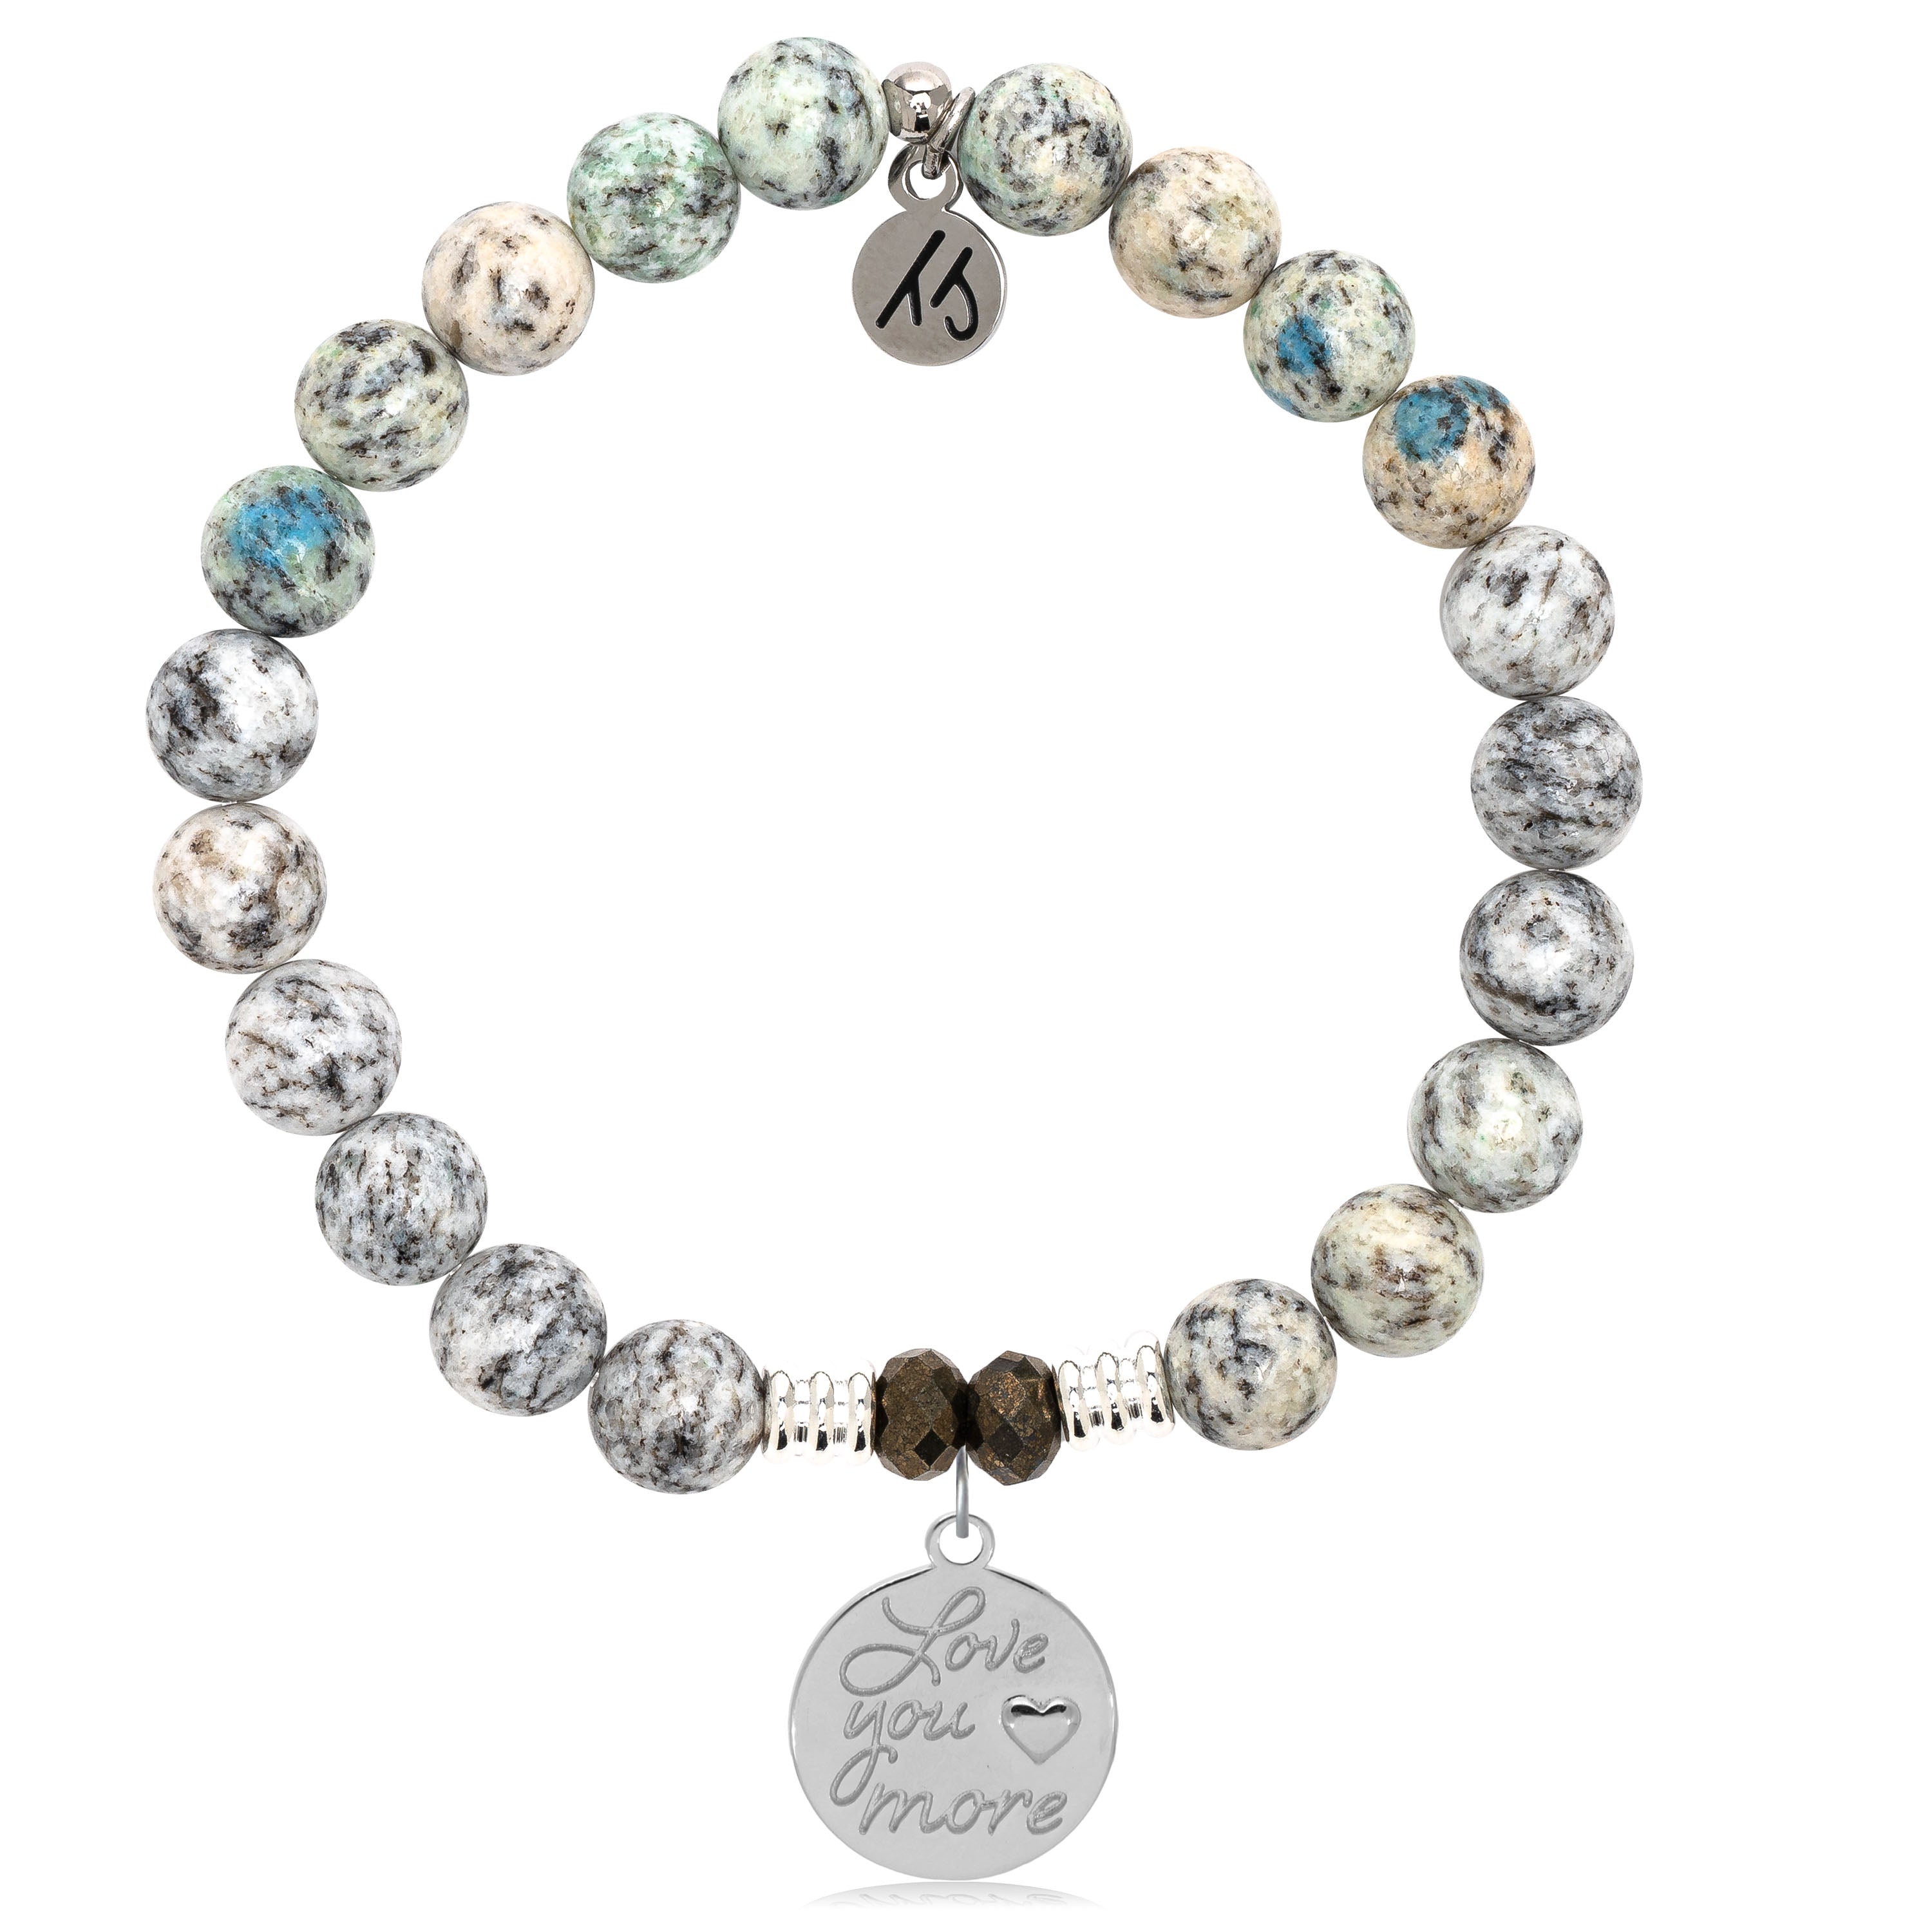 K2 Gemstone Bracelet with Love You More Sterling Silver Charm | T. Jazelle